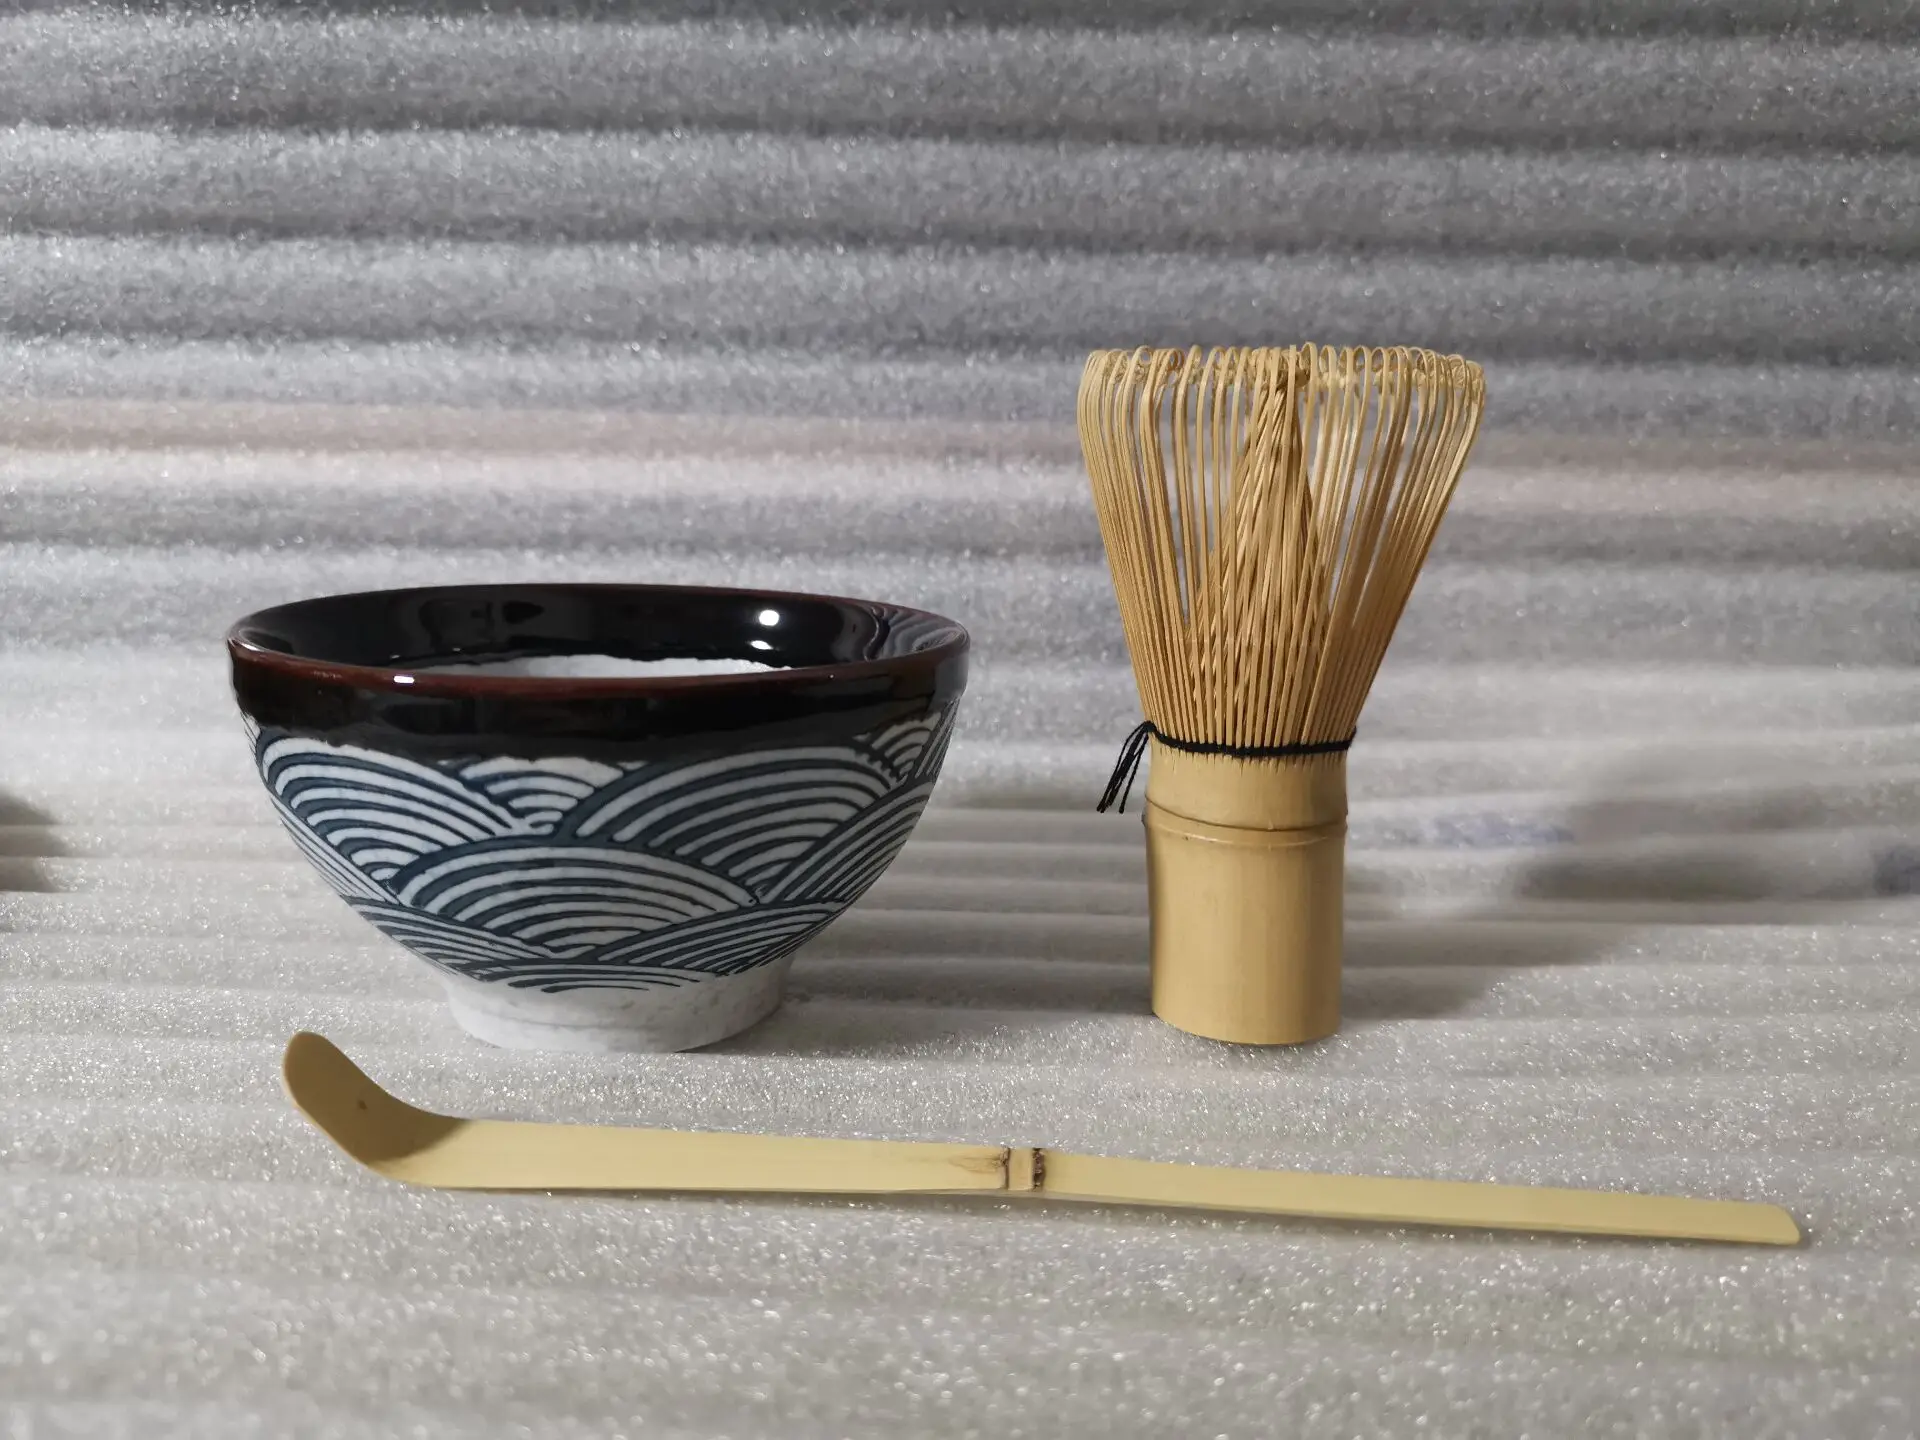 https://ae01.alicdn.com/kf/S55ca04b2734b4e4a85c468b28257b4c0C/Japanese-matcha-tea-set-matcha-bowl-bamboo-whisk-holder-tray-matcha-set.jpg